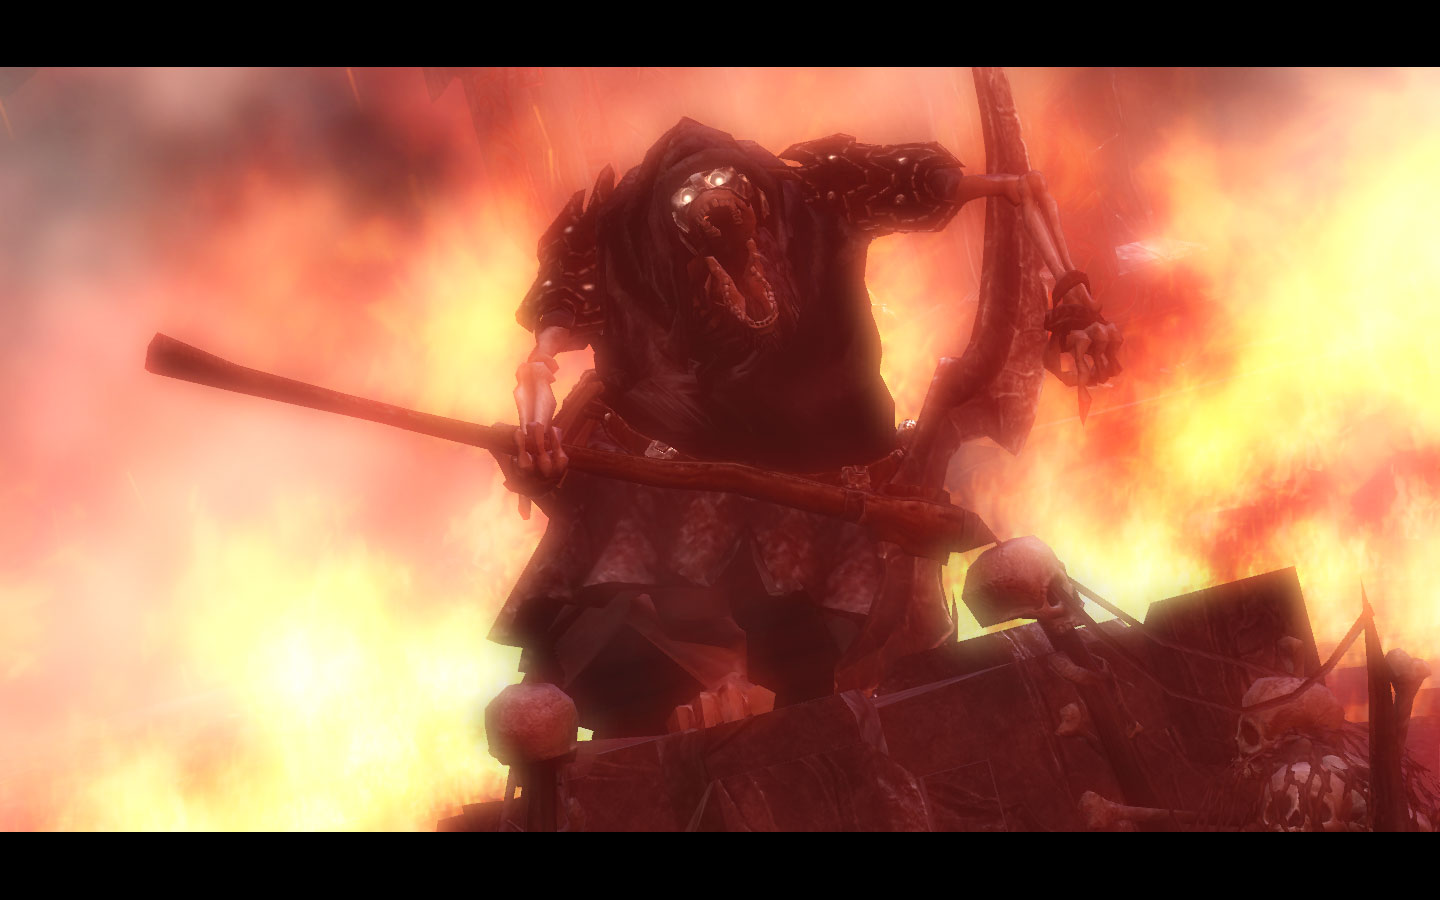 Overlord: Raising Hell screenshot